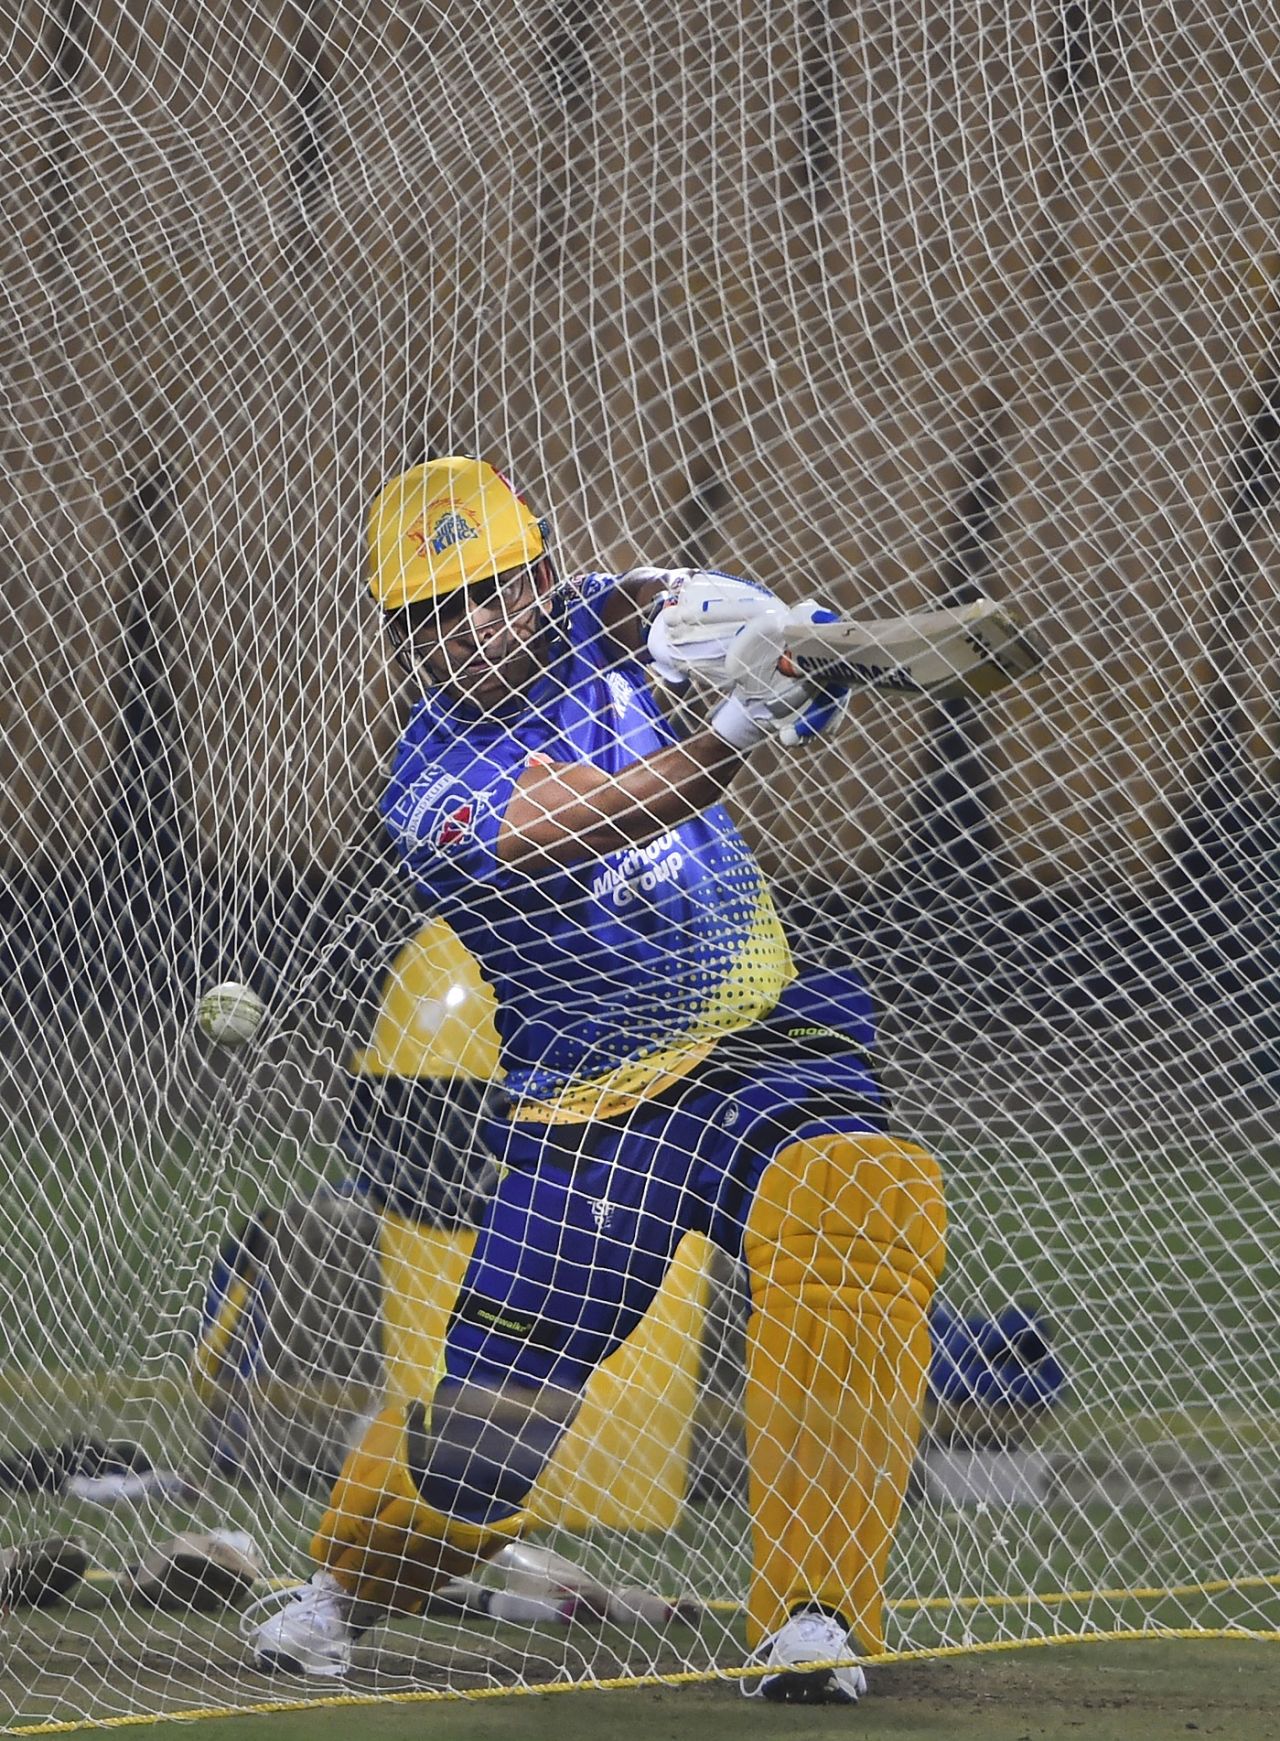 MS Dhoni hits out at the Chepauk nets, IPL 2020, Chennai, March 3, 2020